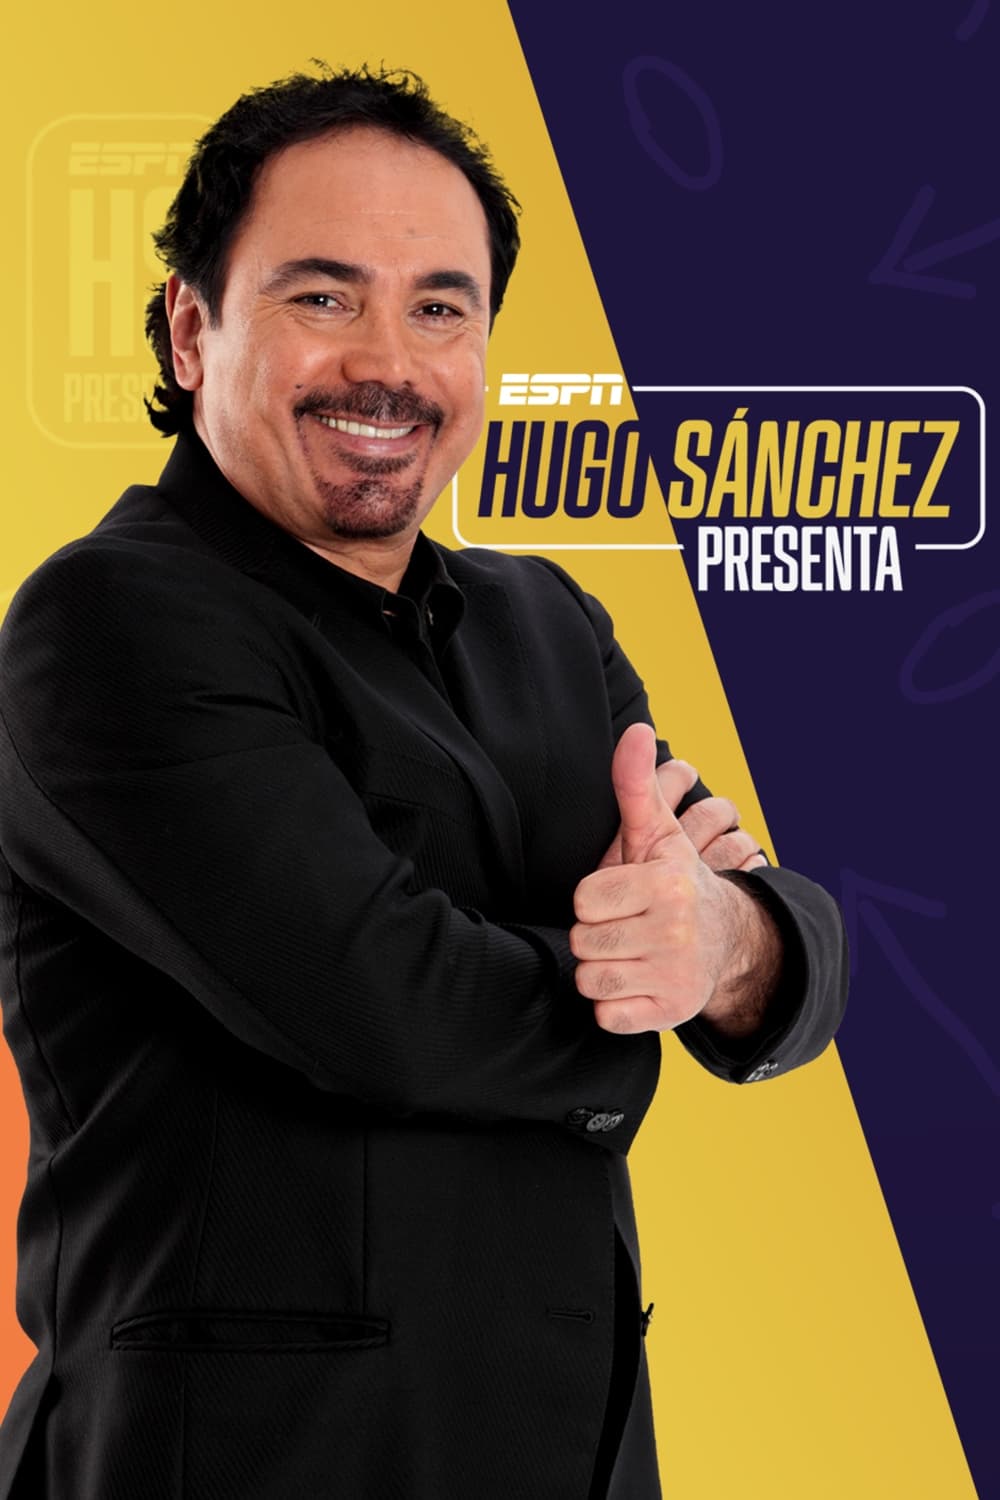 Hugo Sánchez Presents